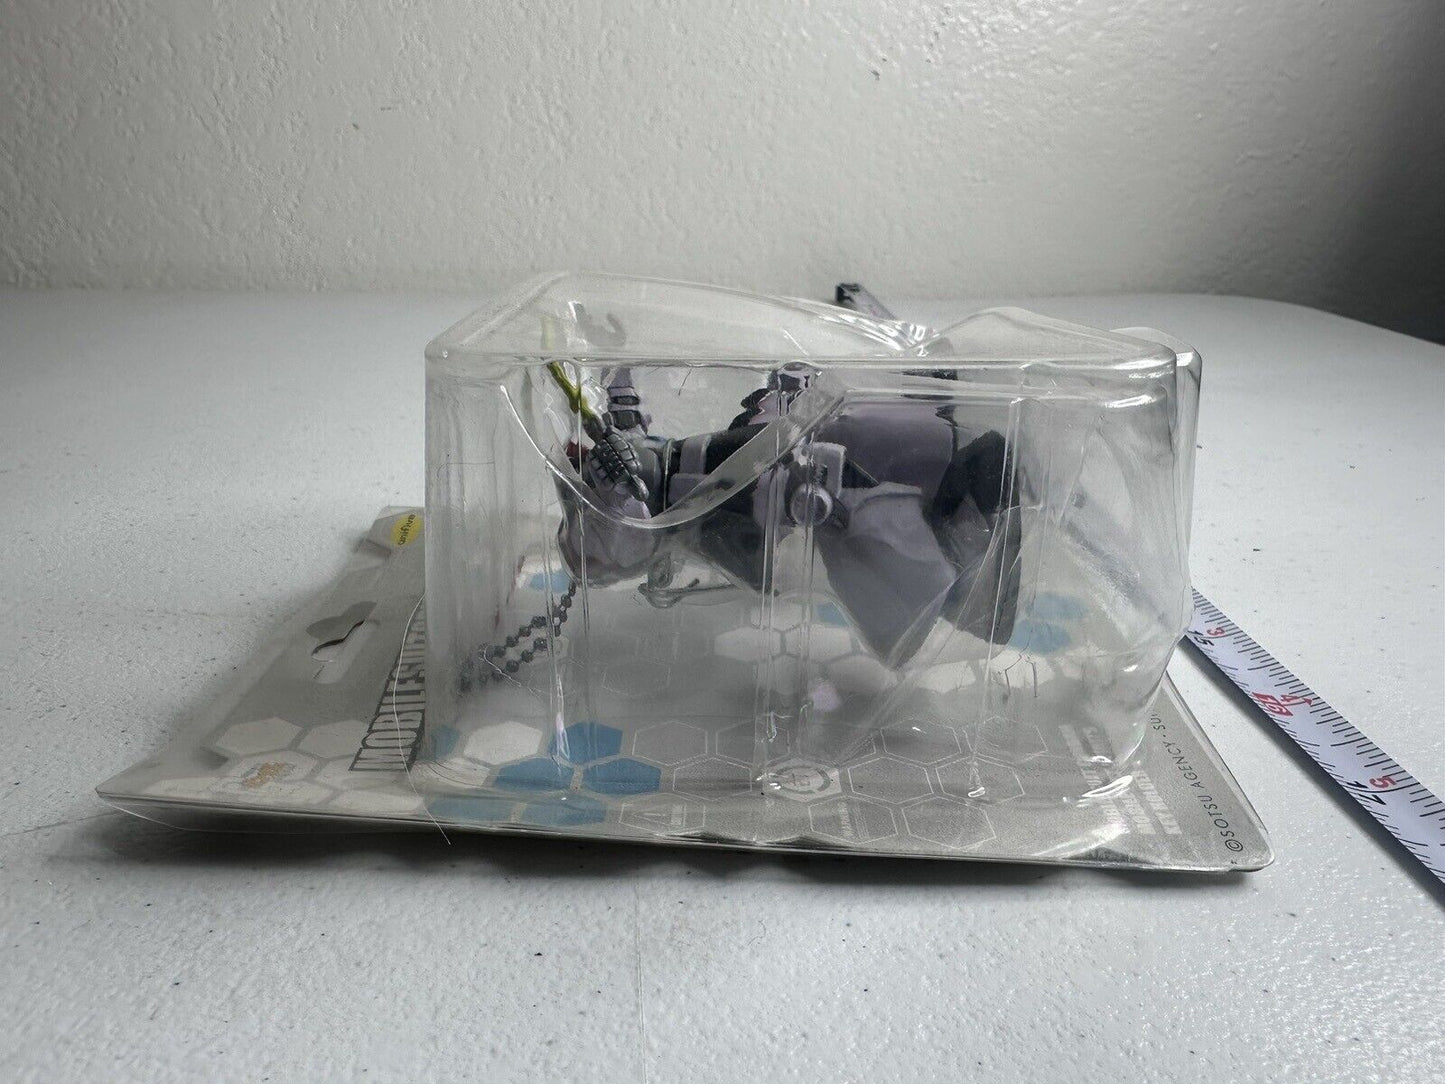 2004 UniFive Mobile Suit Gundam Spirits Key Holder 2 Figure - Vintage Robot Spirits Collectible - TreasuTiques